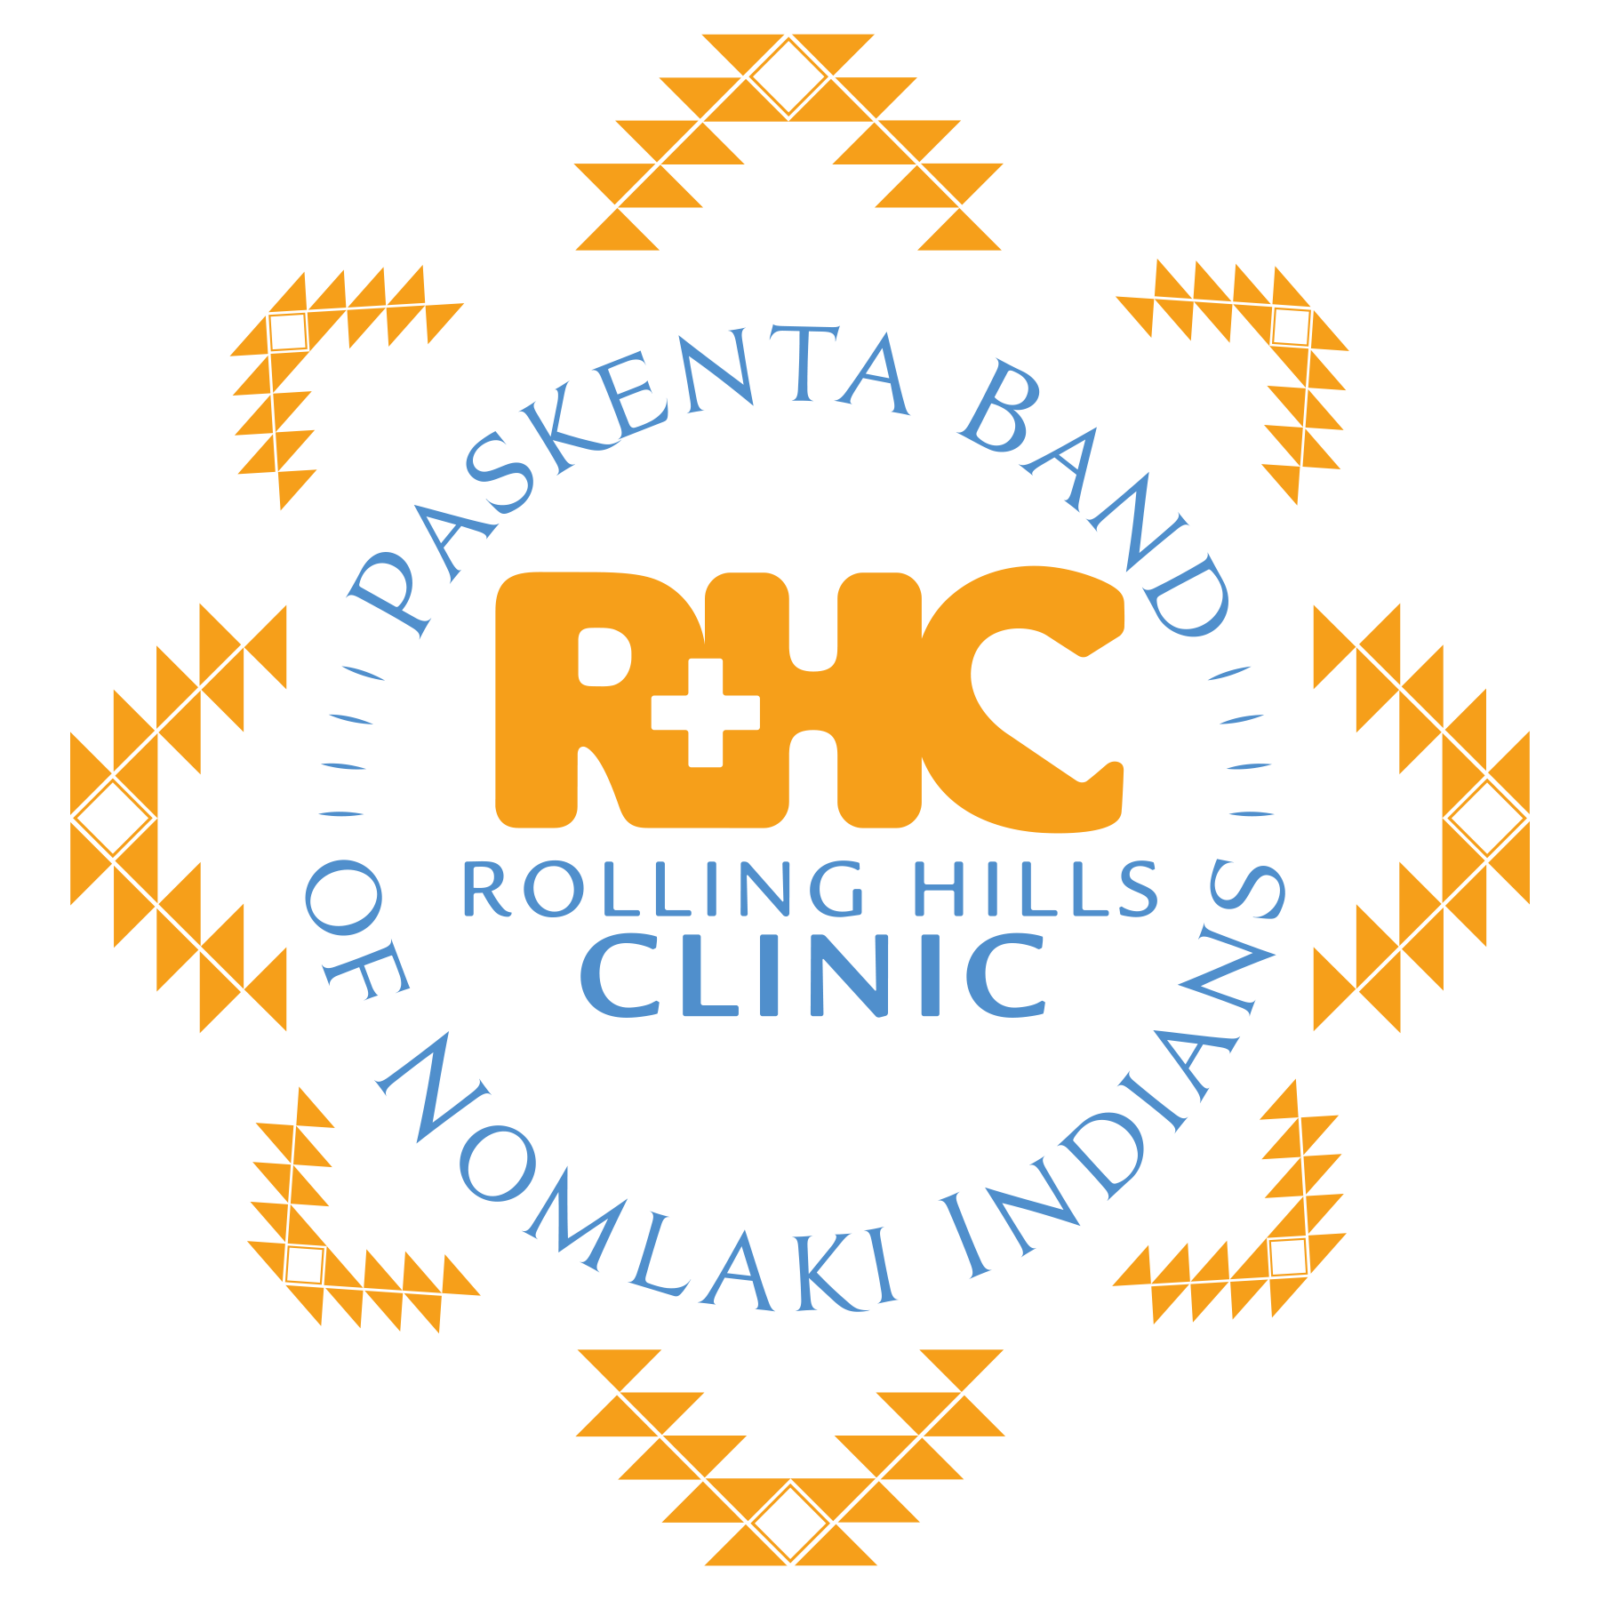 Rolling Hills Clinic